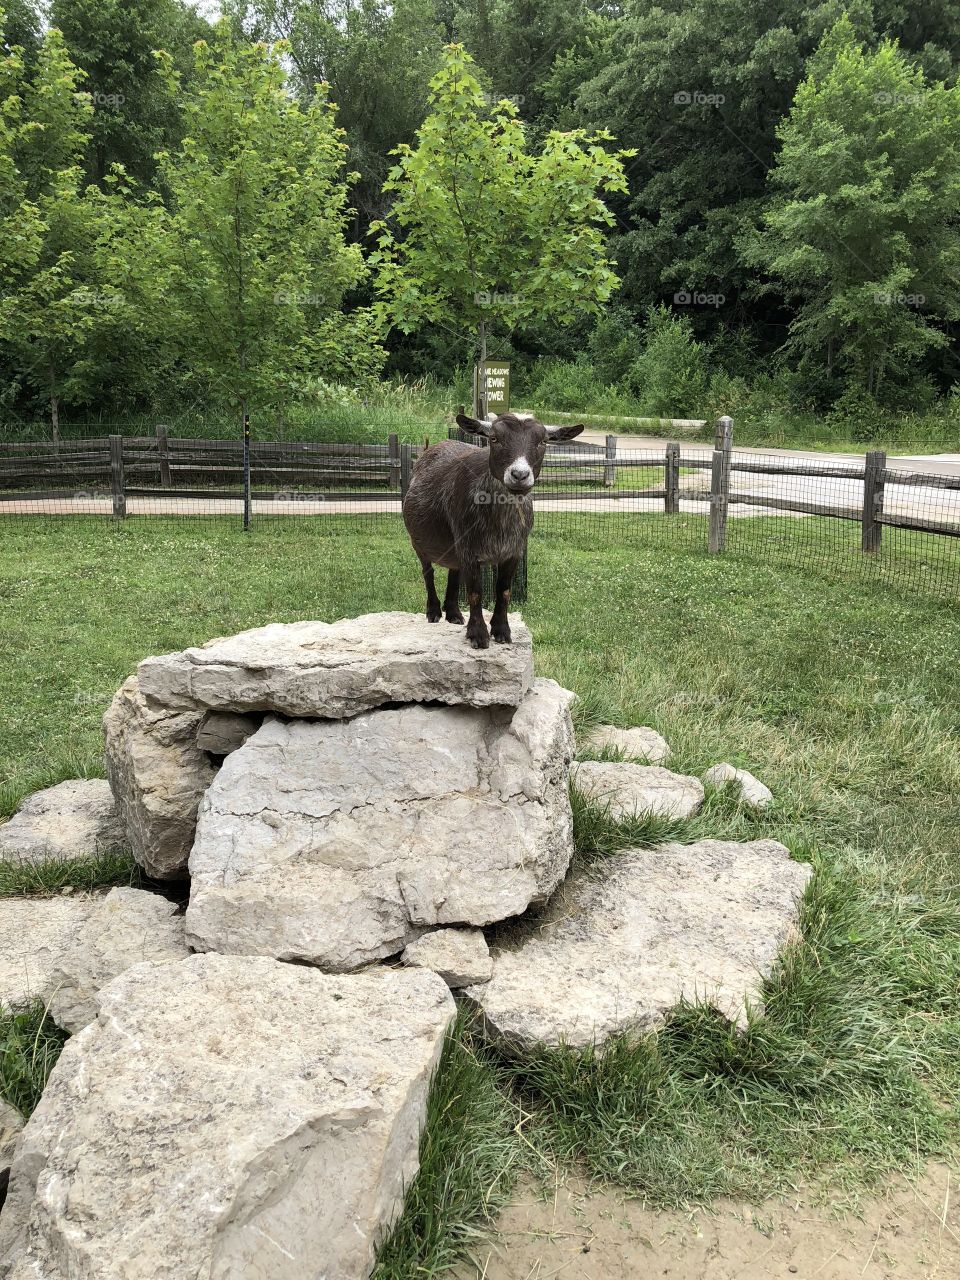 Goat on top of huge stone slabs taken on 6/22/18